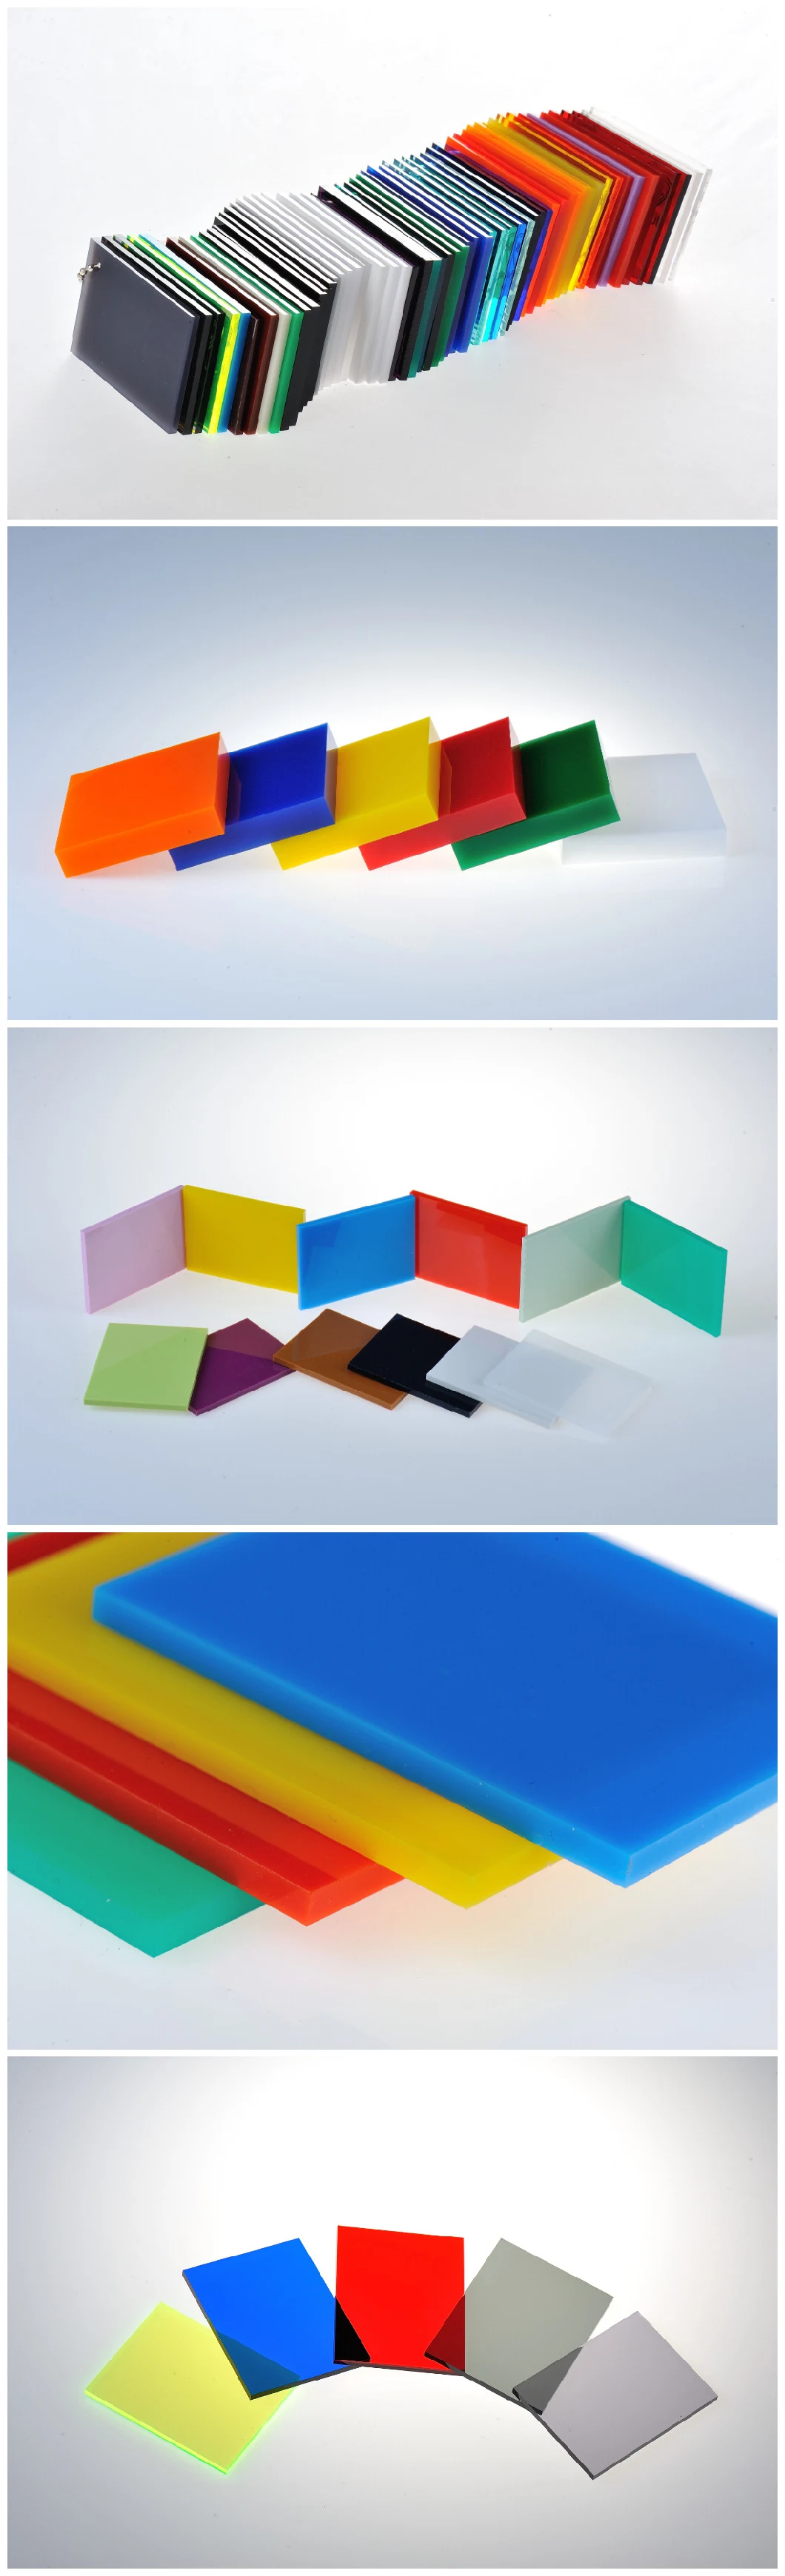 Fluorescent Acrylic Sheet, Yellow Acrylic Sheet, Iridescent Plexiglass Sheet